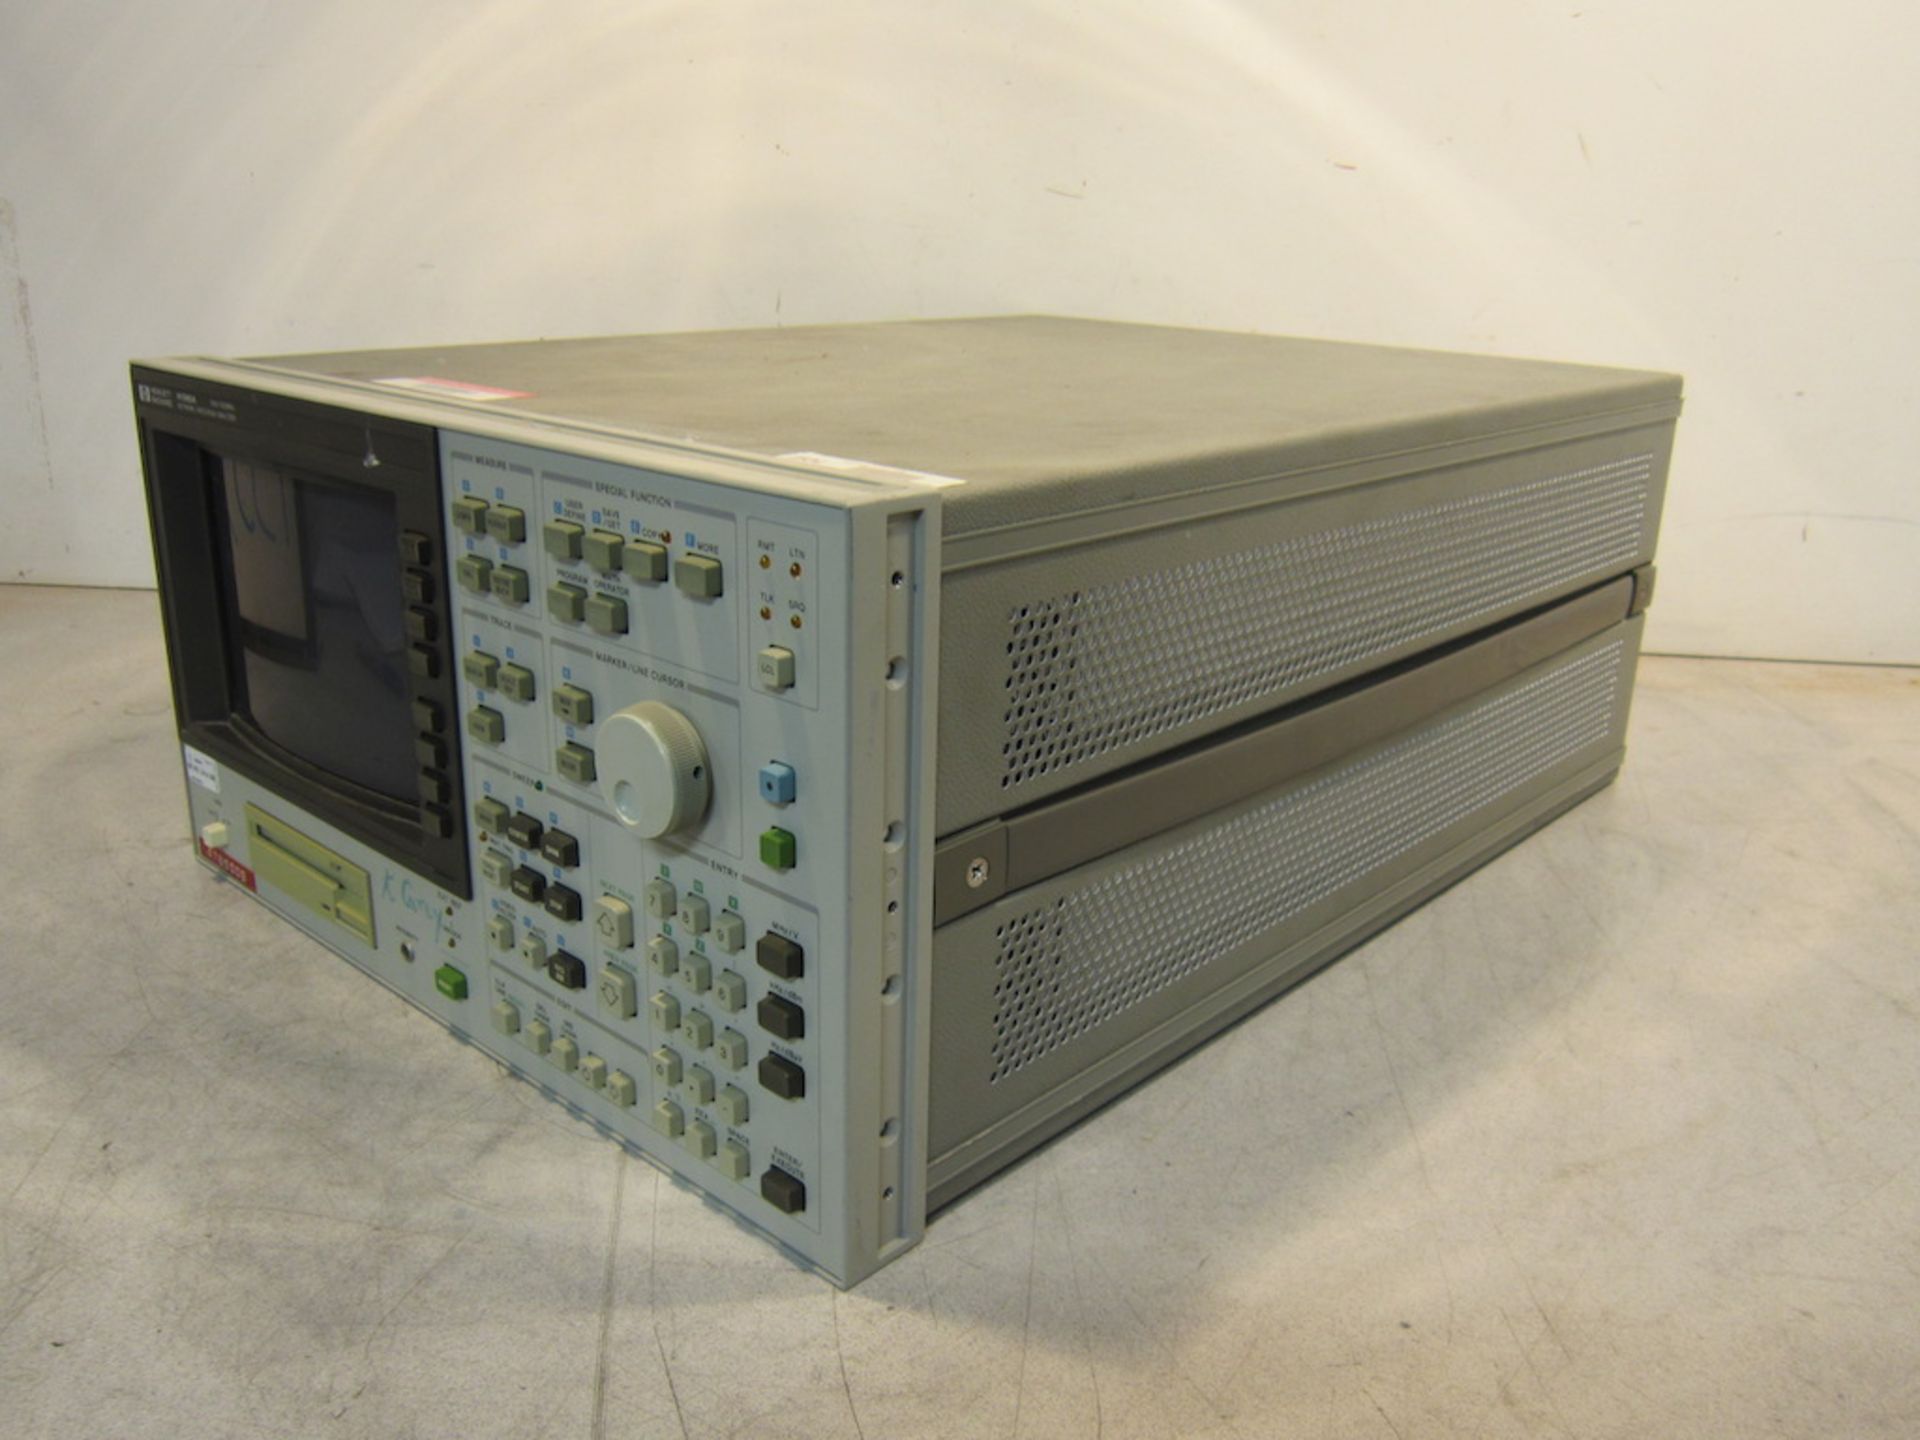 Lot Of 2 Hewlett-Packard 4195A 10Hz-500Mhz, Network / Spectrum Analyzer + Yokogawa Hewlett-Packer - Image 2 of 7